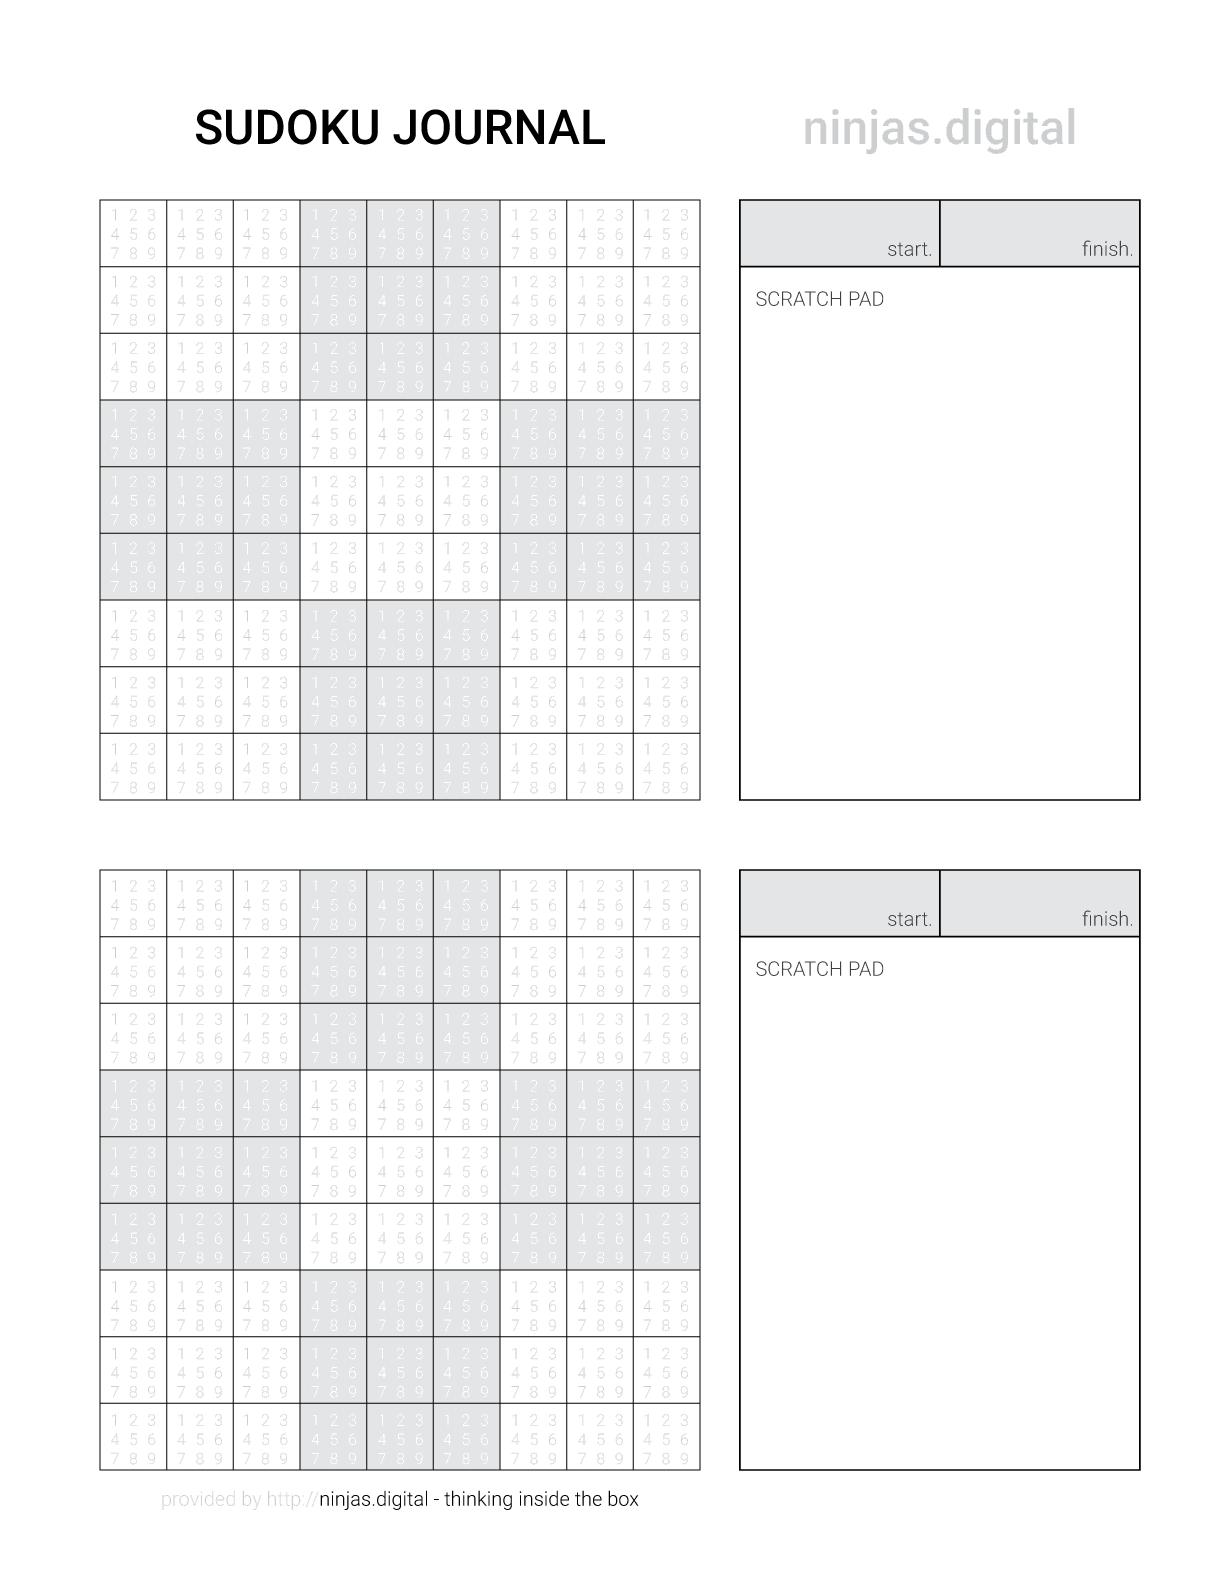 Sudoku Journal Cheat Sheet